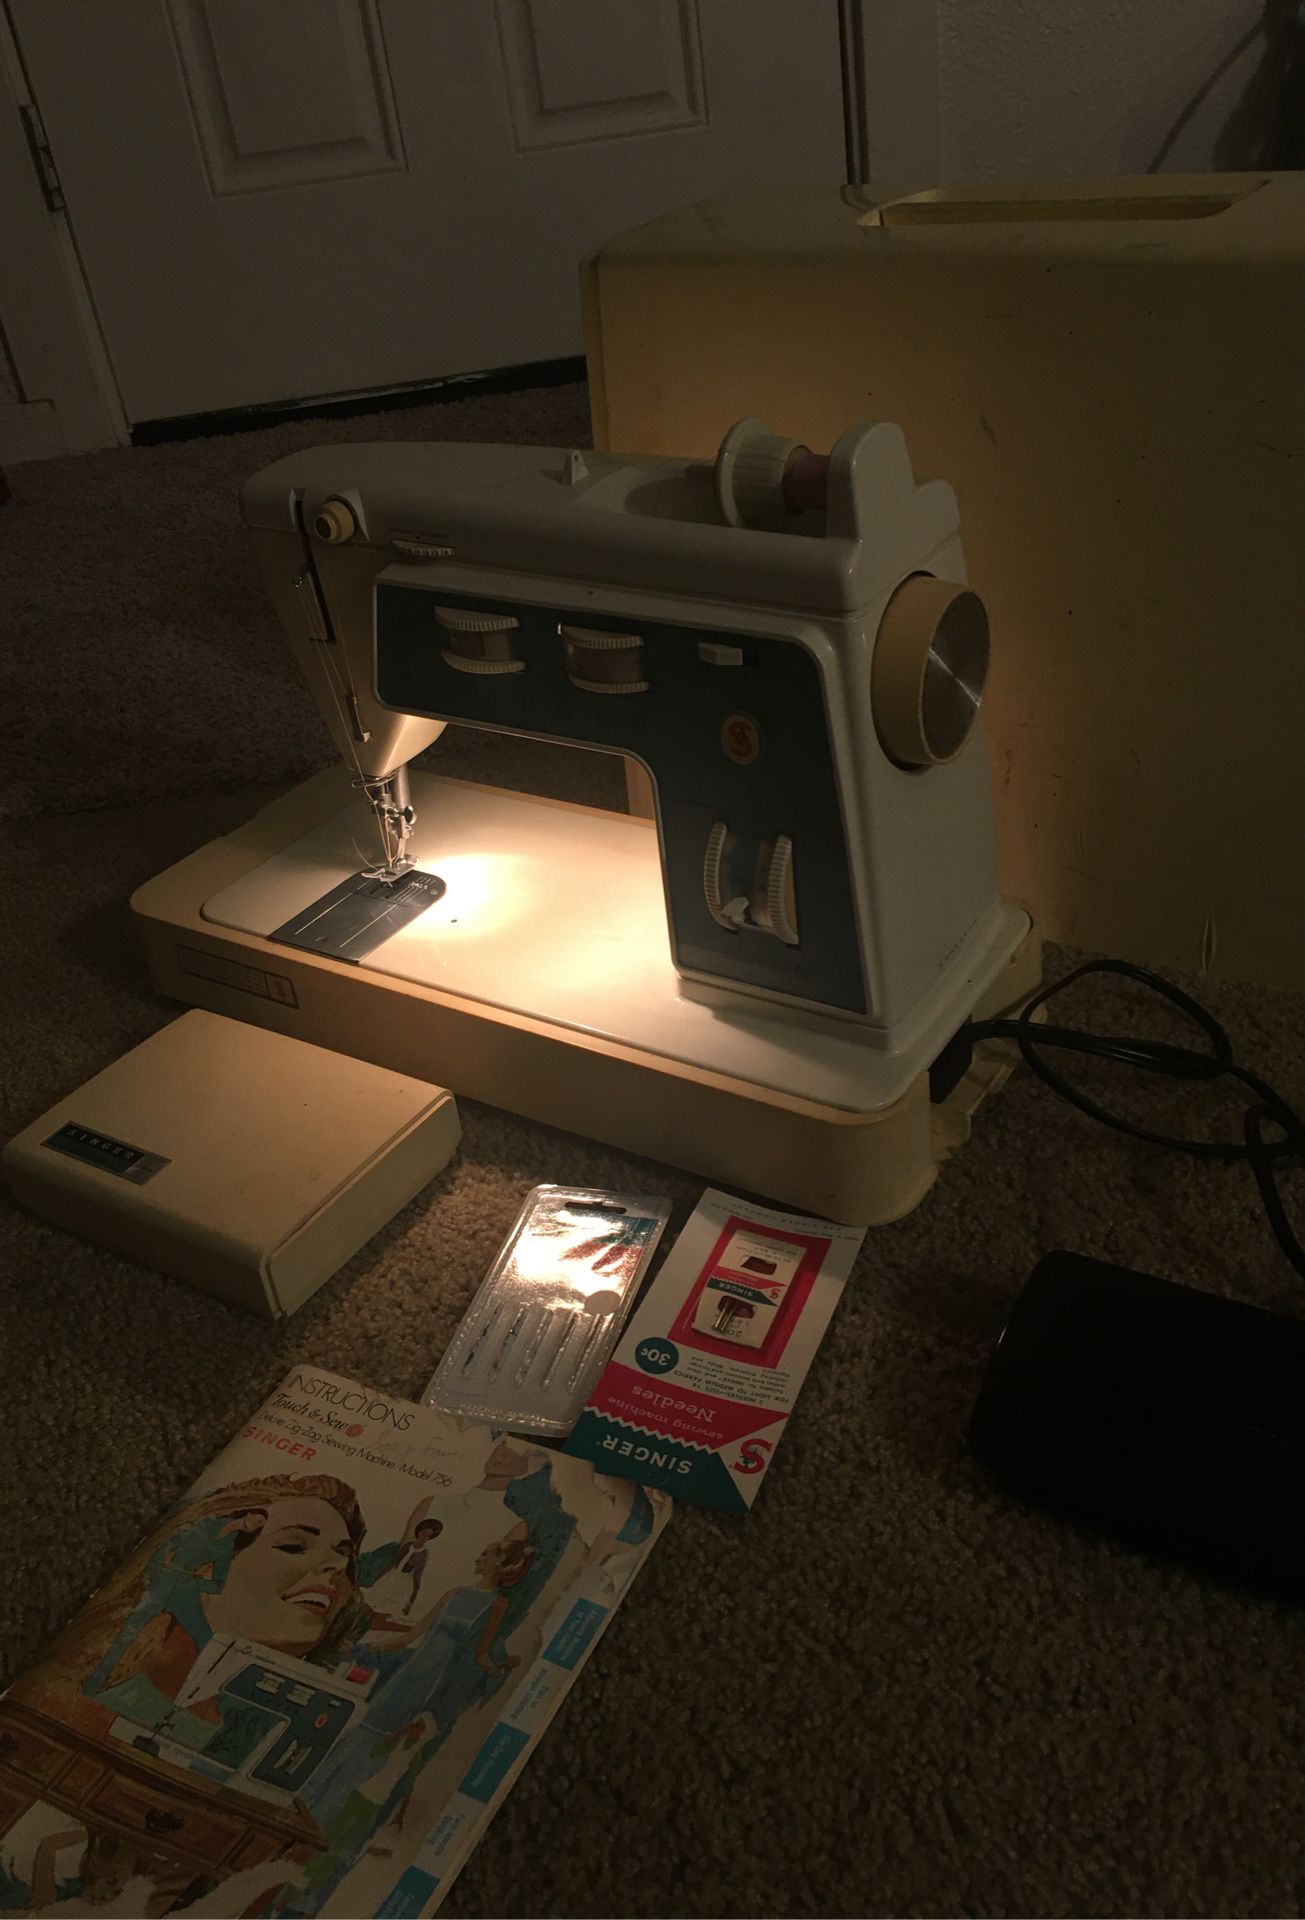 Singer sewing machine model 756